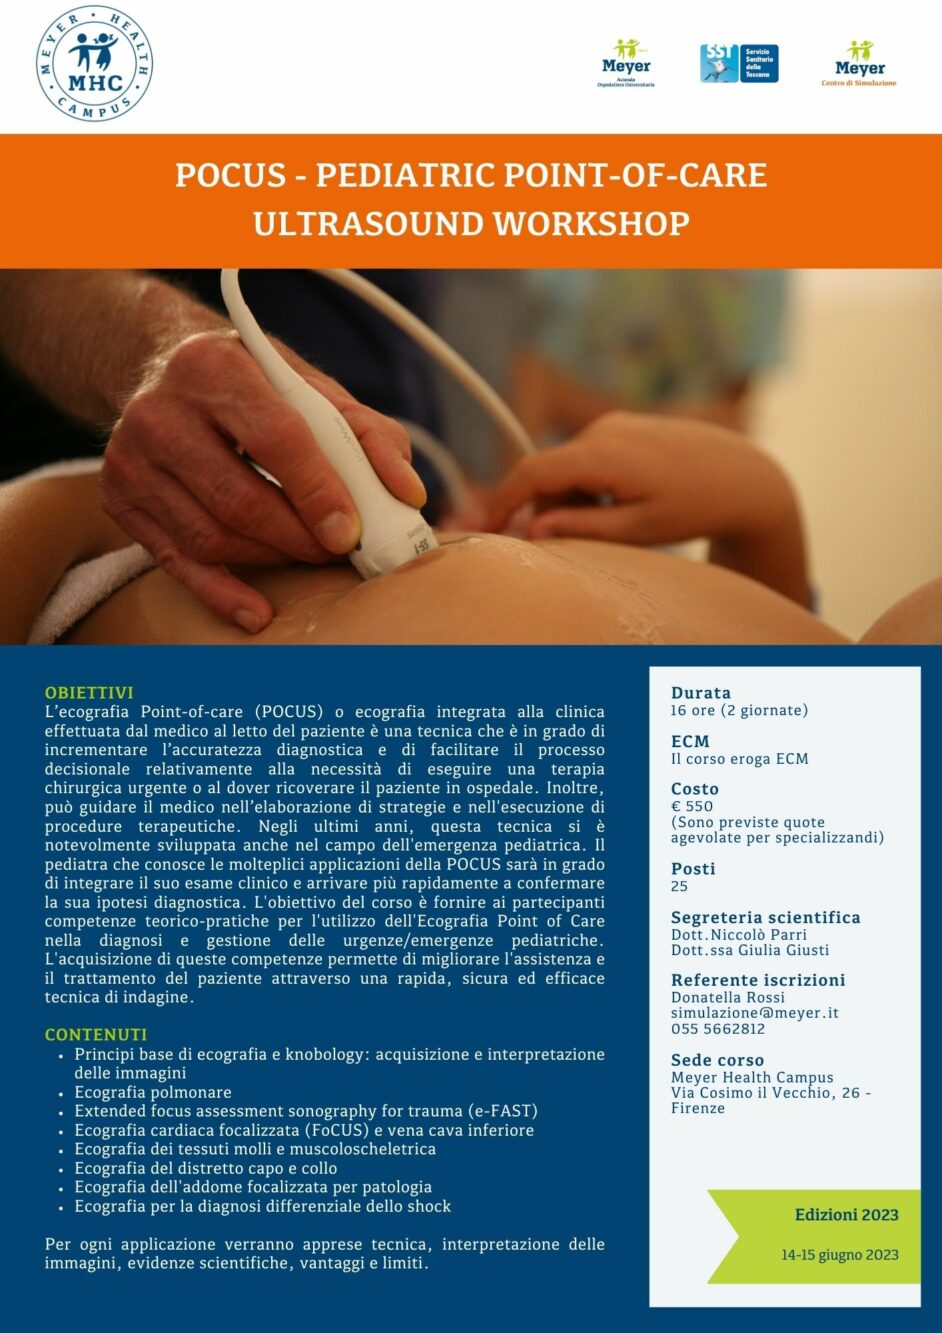 POCUS – Pediatric point-of-care ultrasound workshop (14-15 giugno 2023)